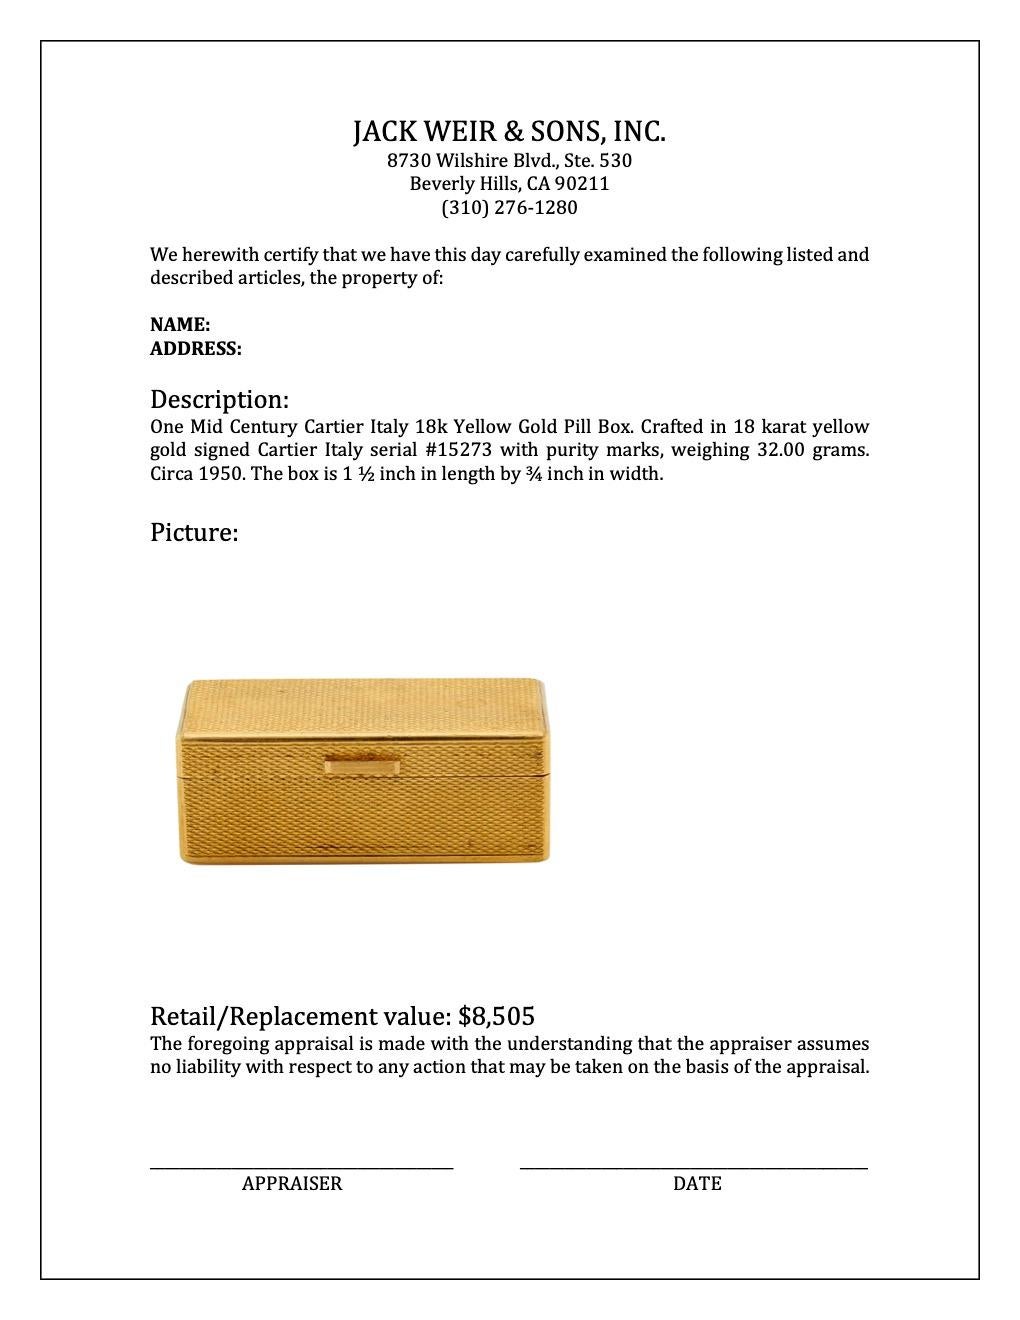 Mid Century Cartier Italy 18k Yellow Gold Pill Box 2